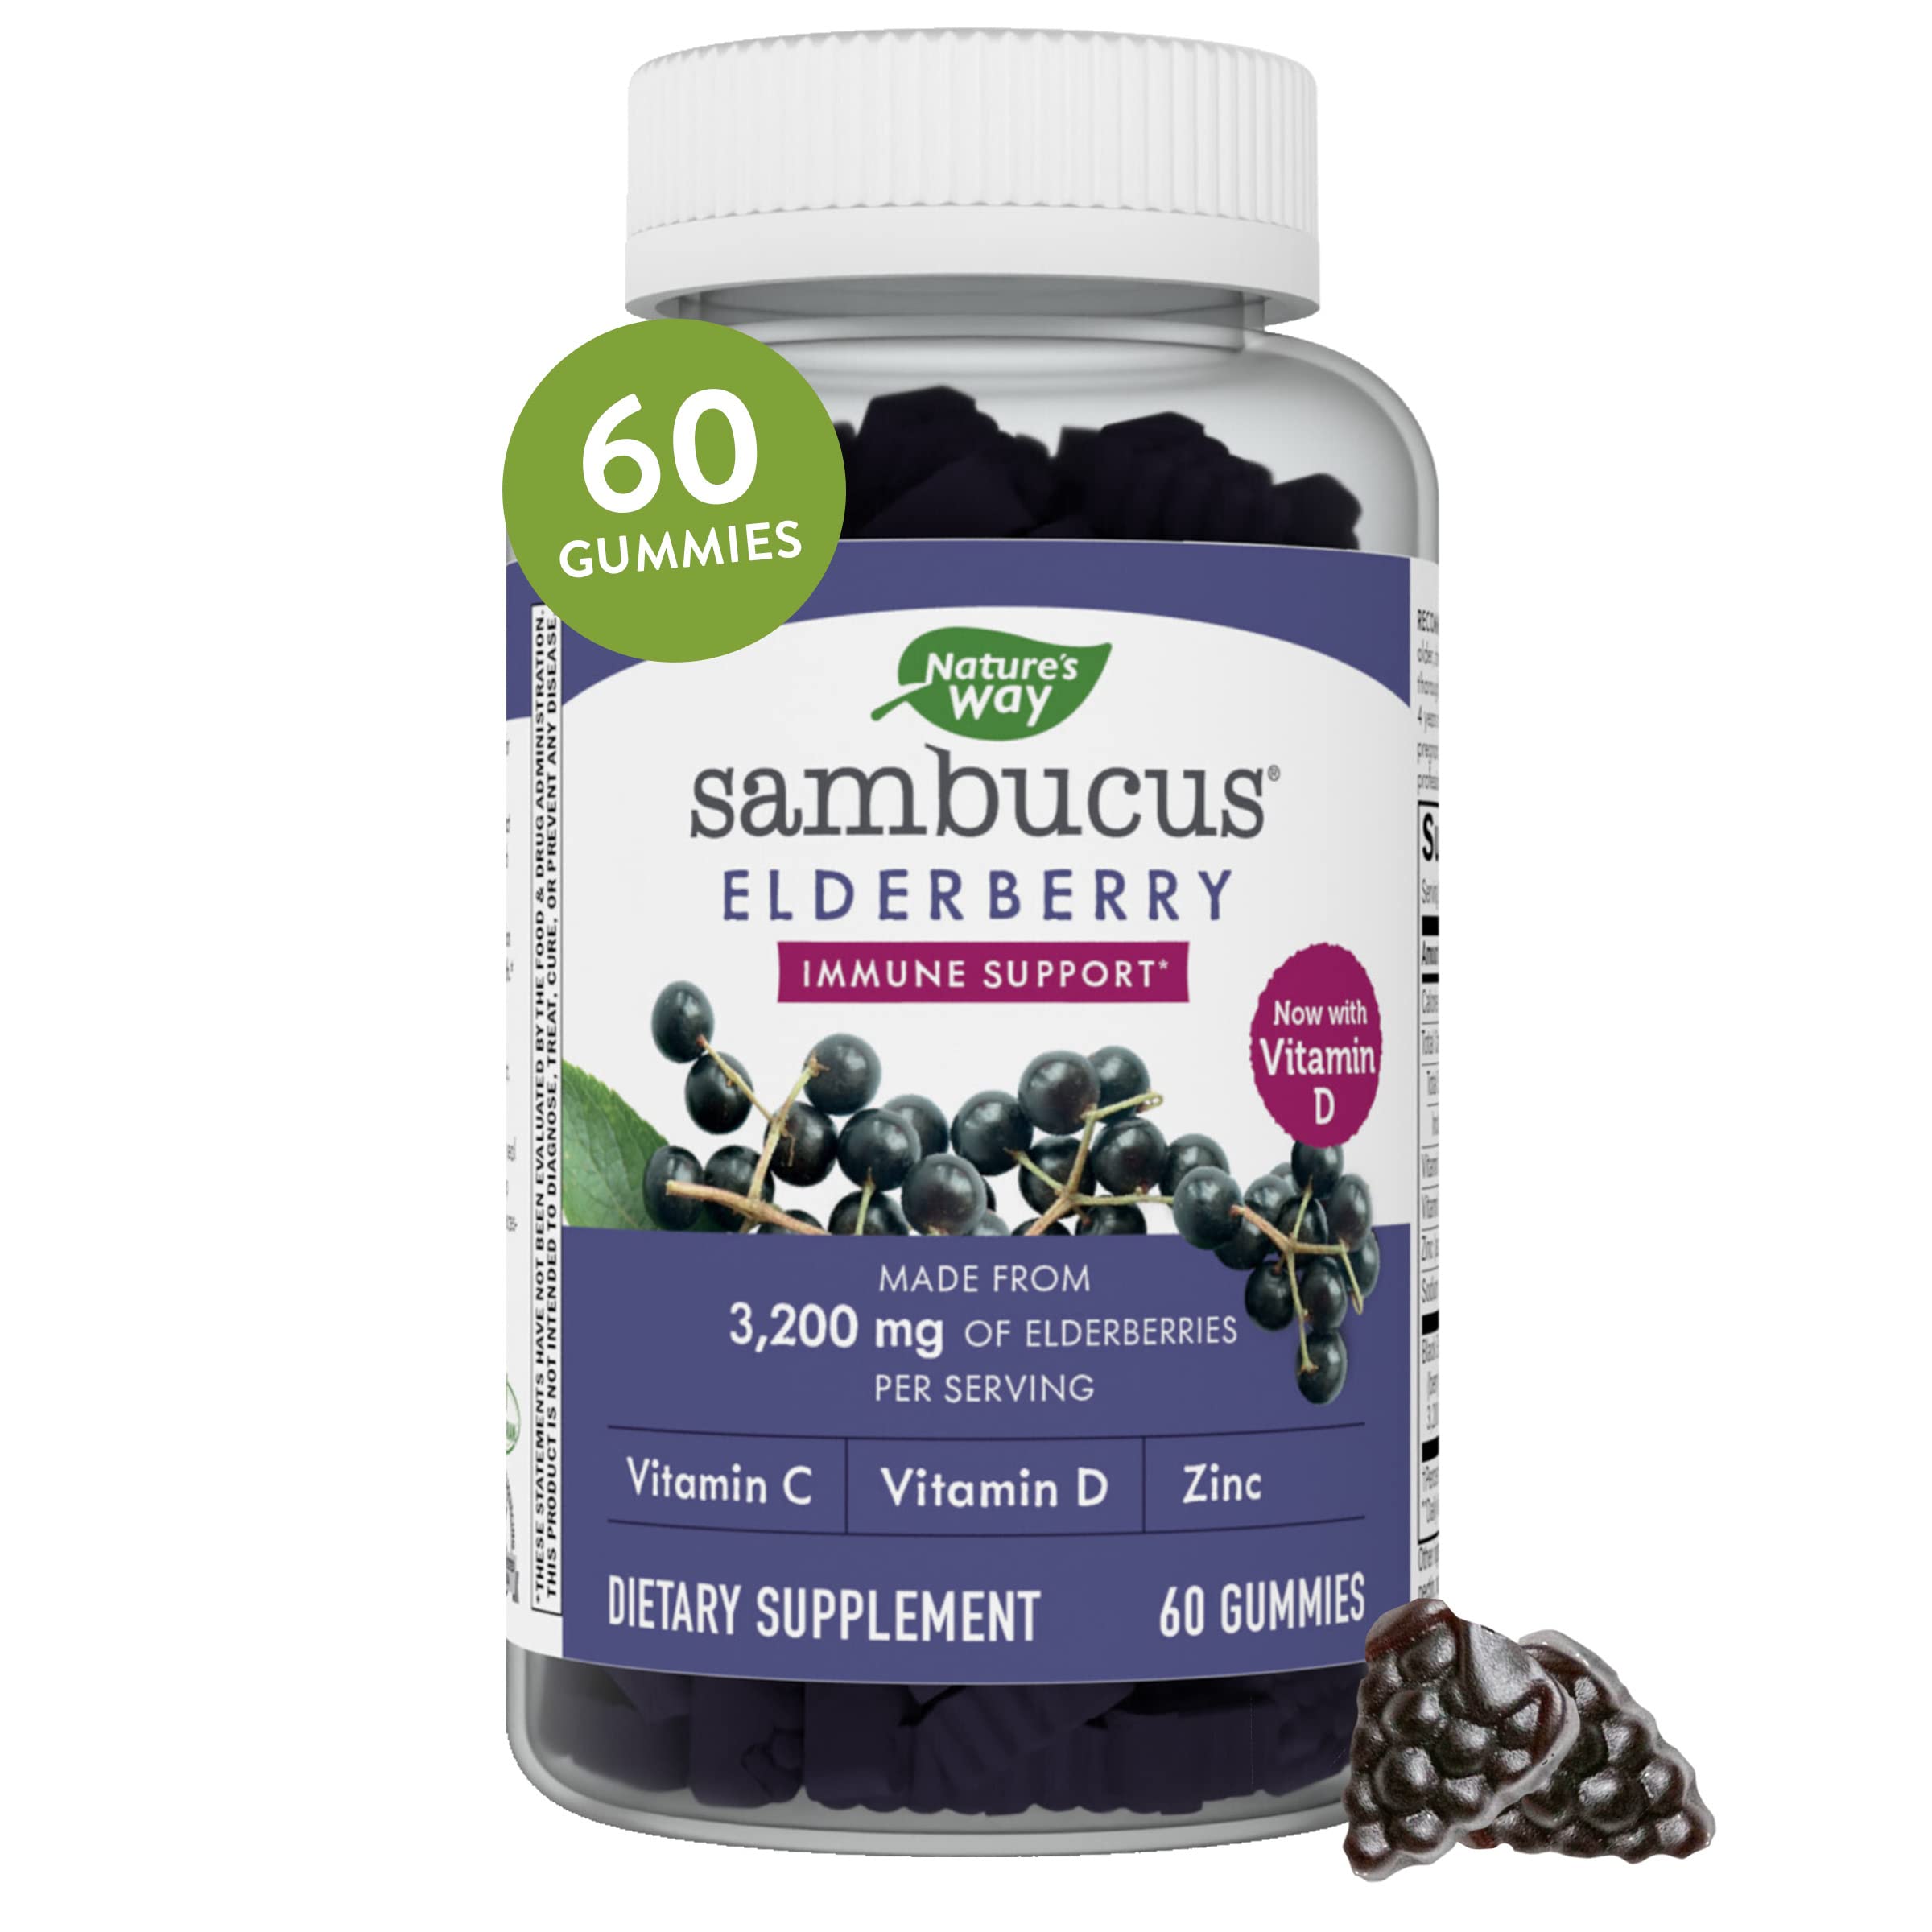 Amazon.com: Nature's Way Sambucus Elderberry Gummies, With Vitamin